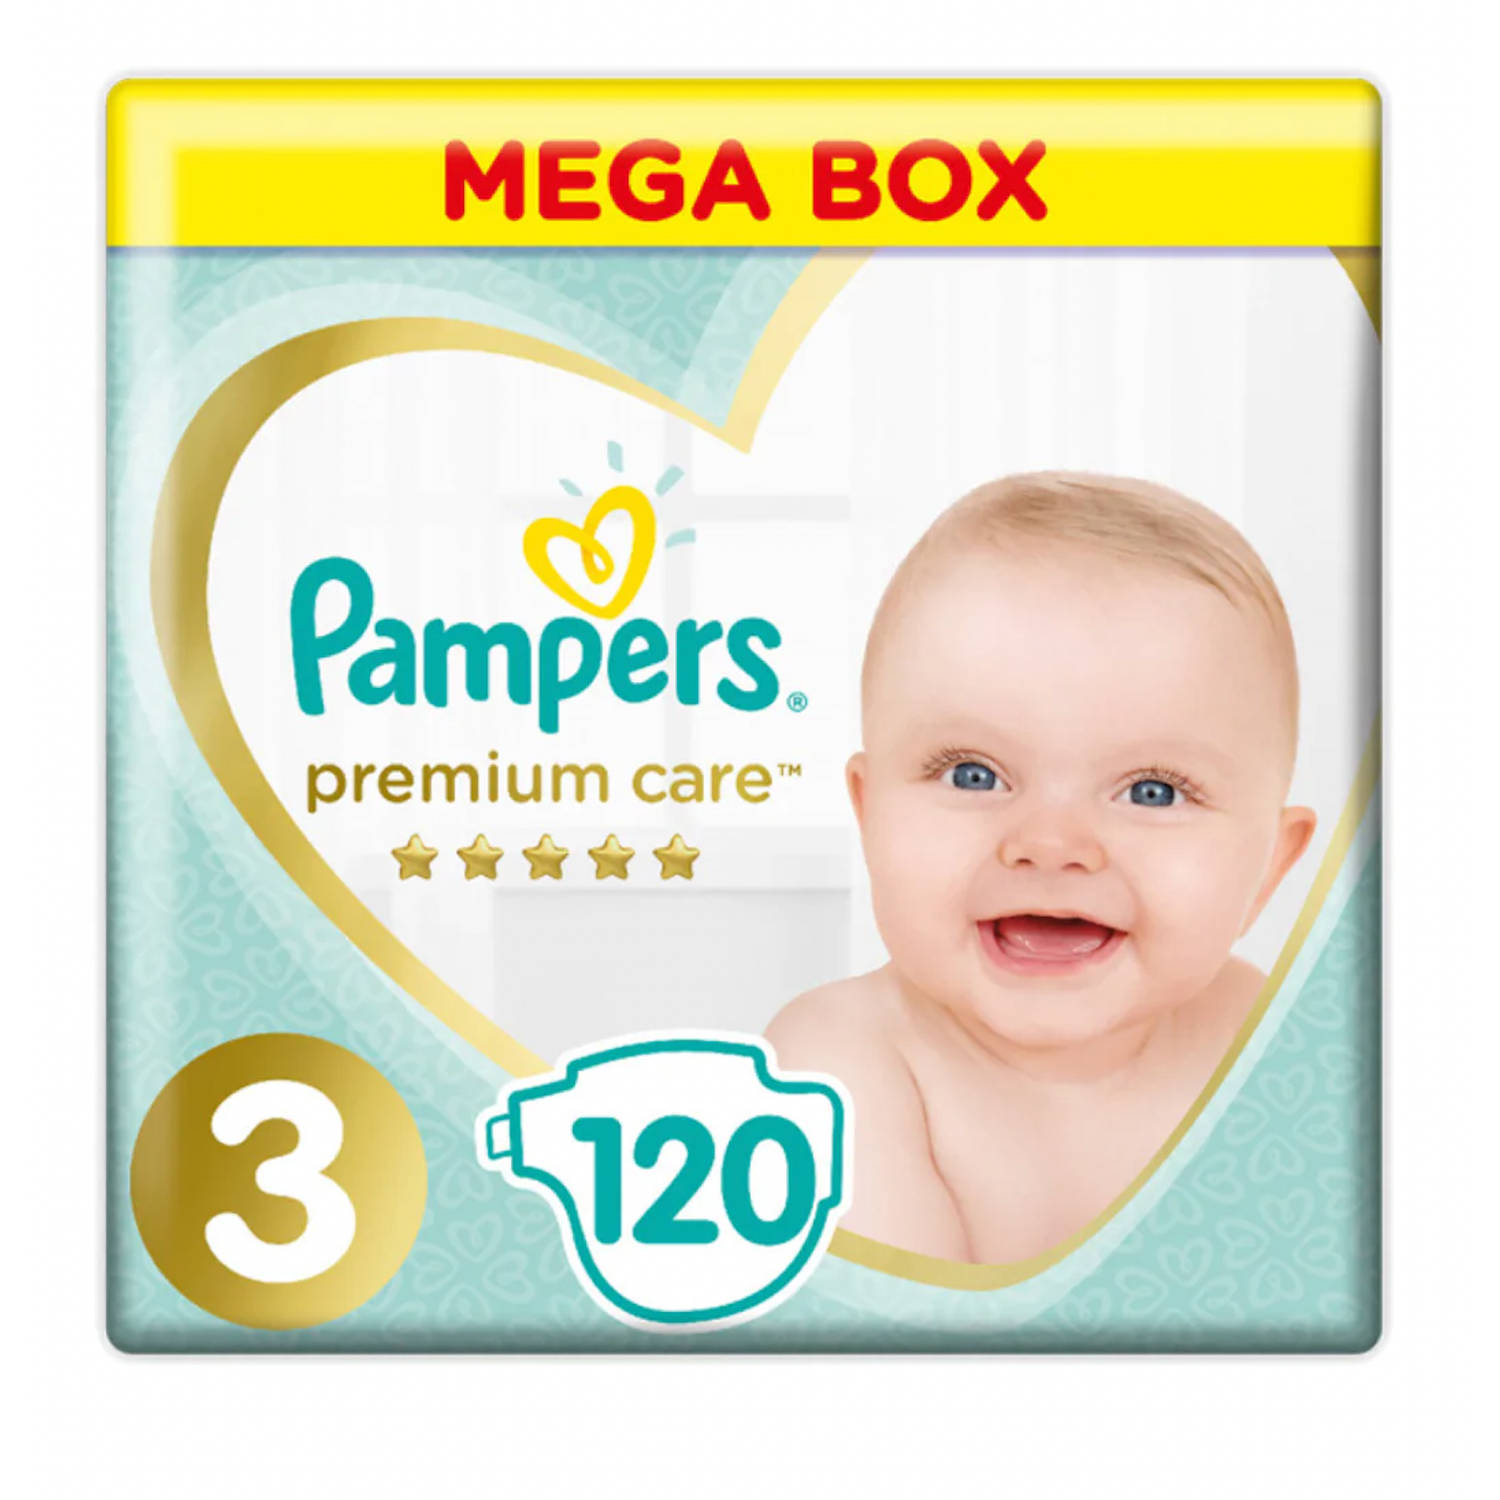 Pampers - Premium Care - Maat 3 - Mega Pack - 120 luiers